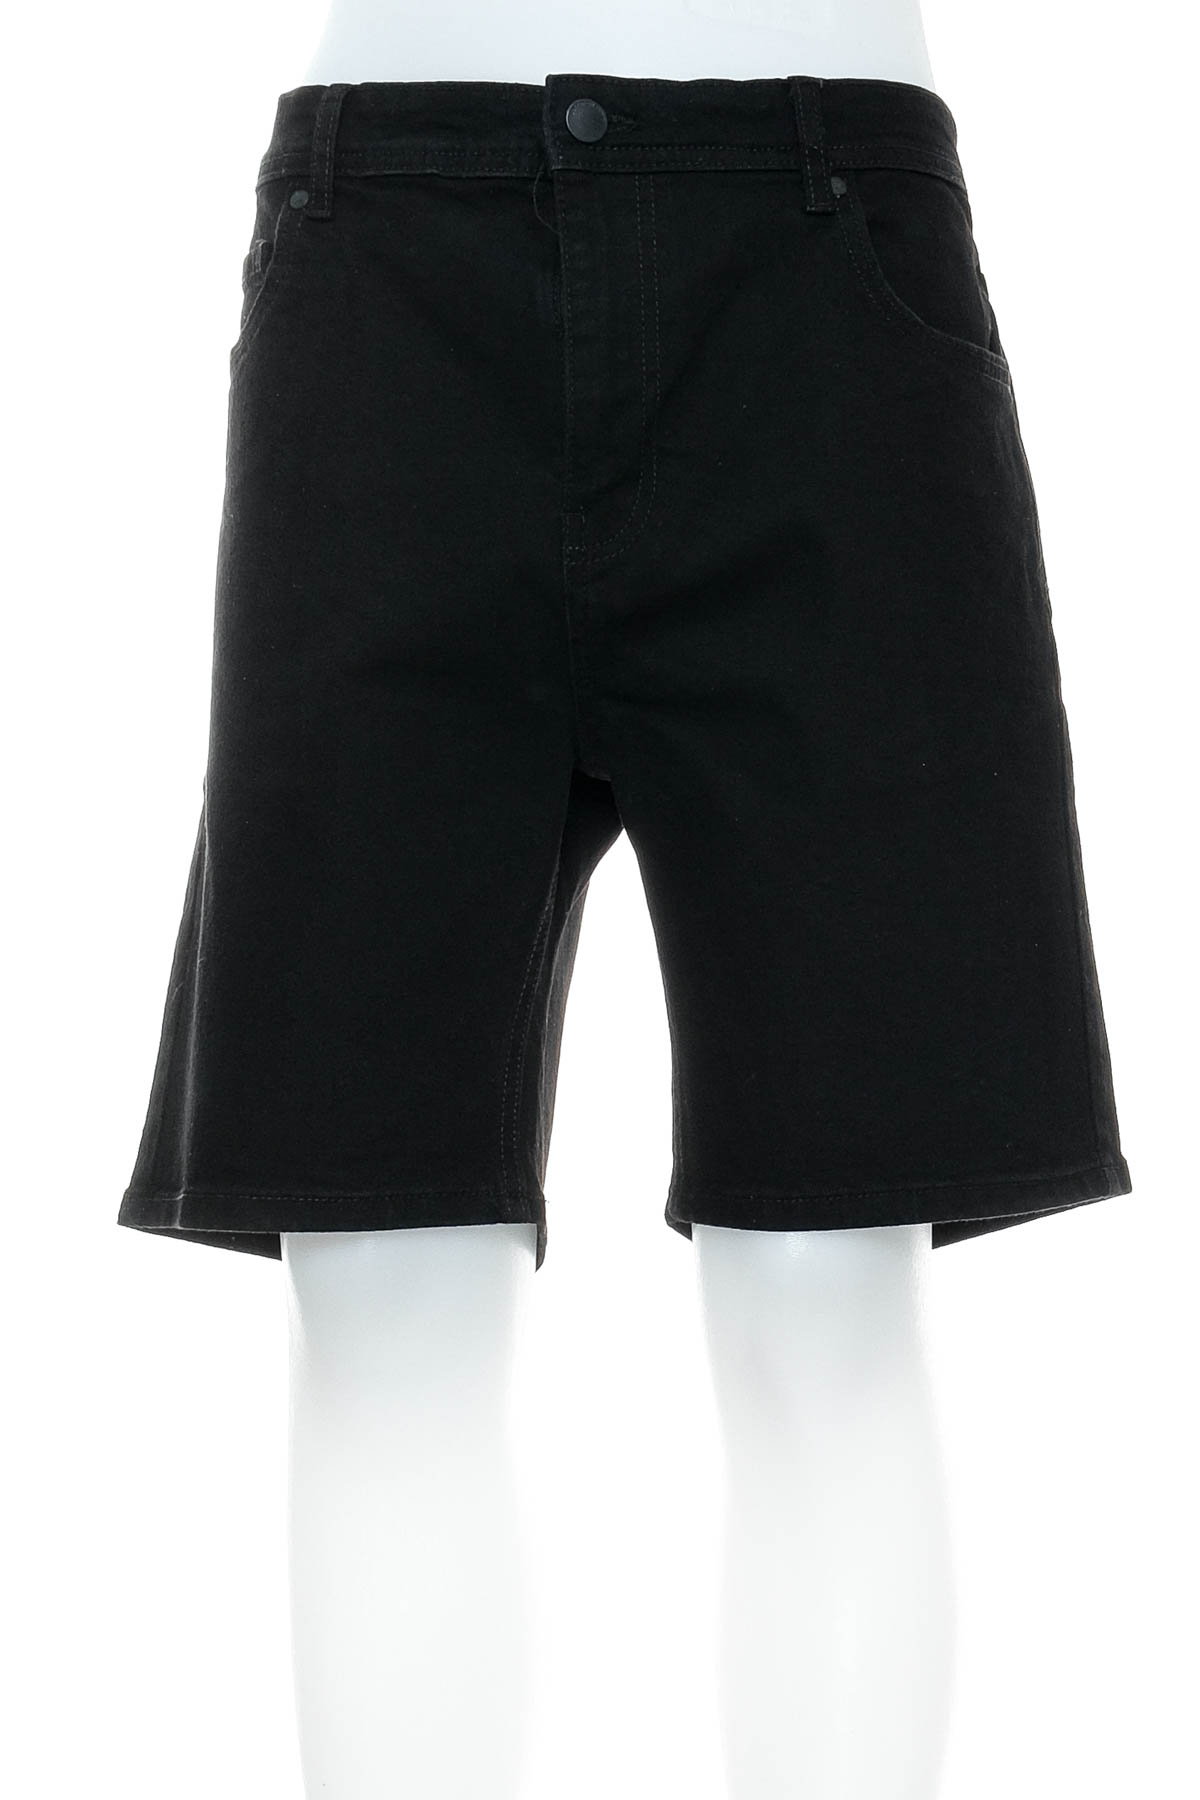 Men's shorts - COTTON:ON - 0